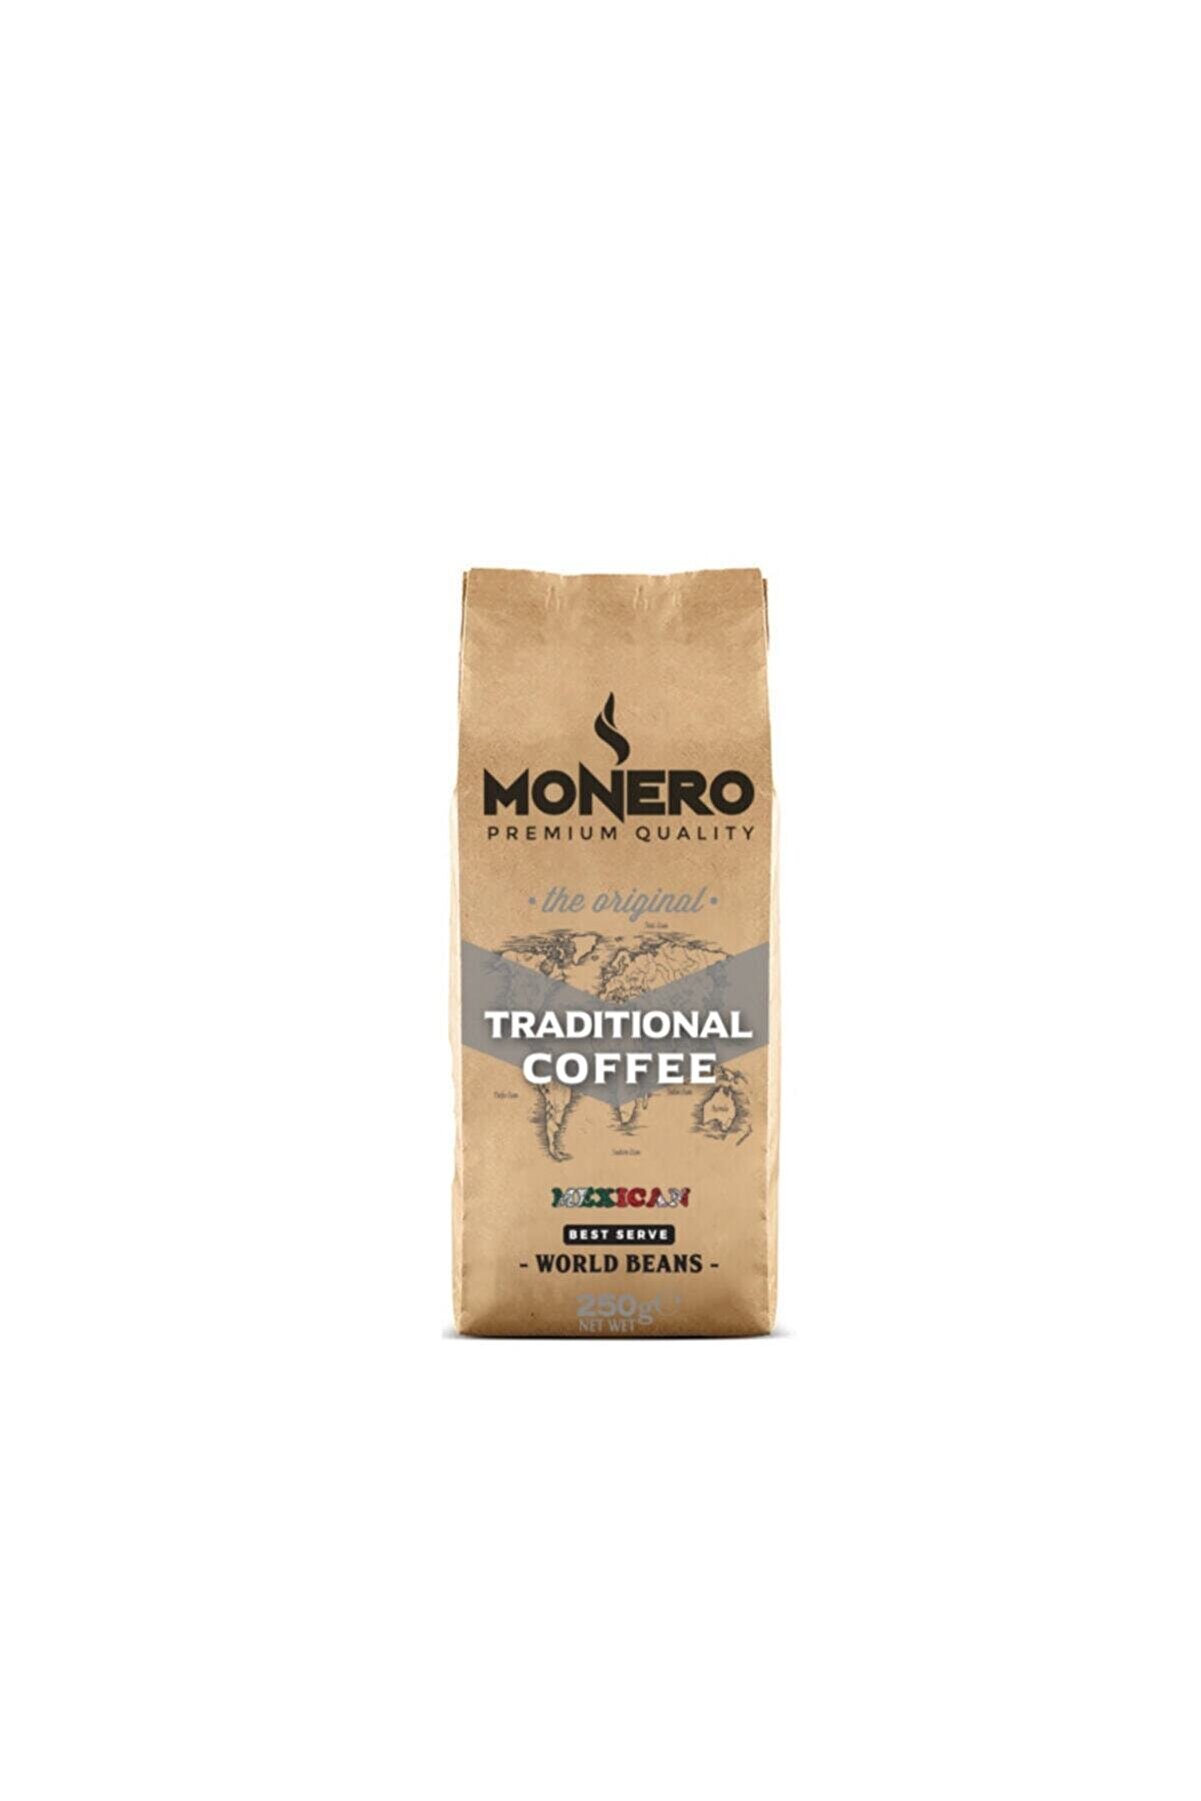 Monero Yöresel Filtre Kahve Meksika 250 Gr.